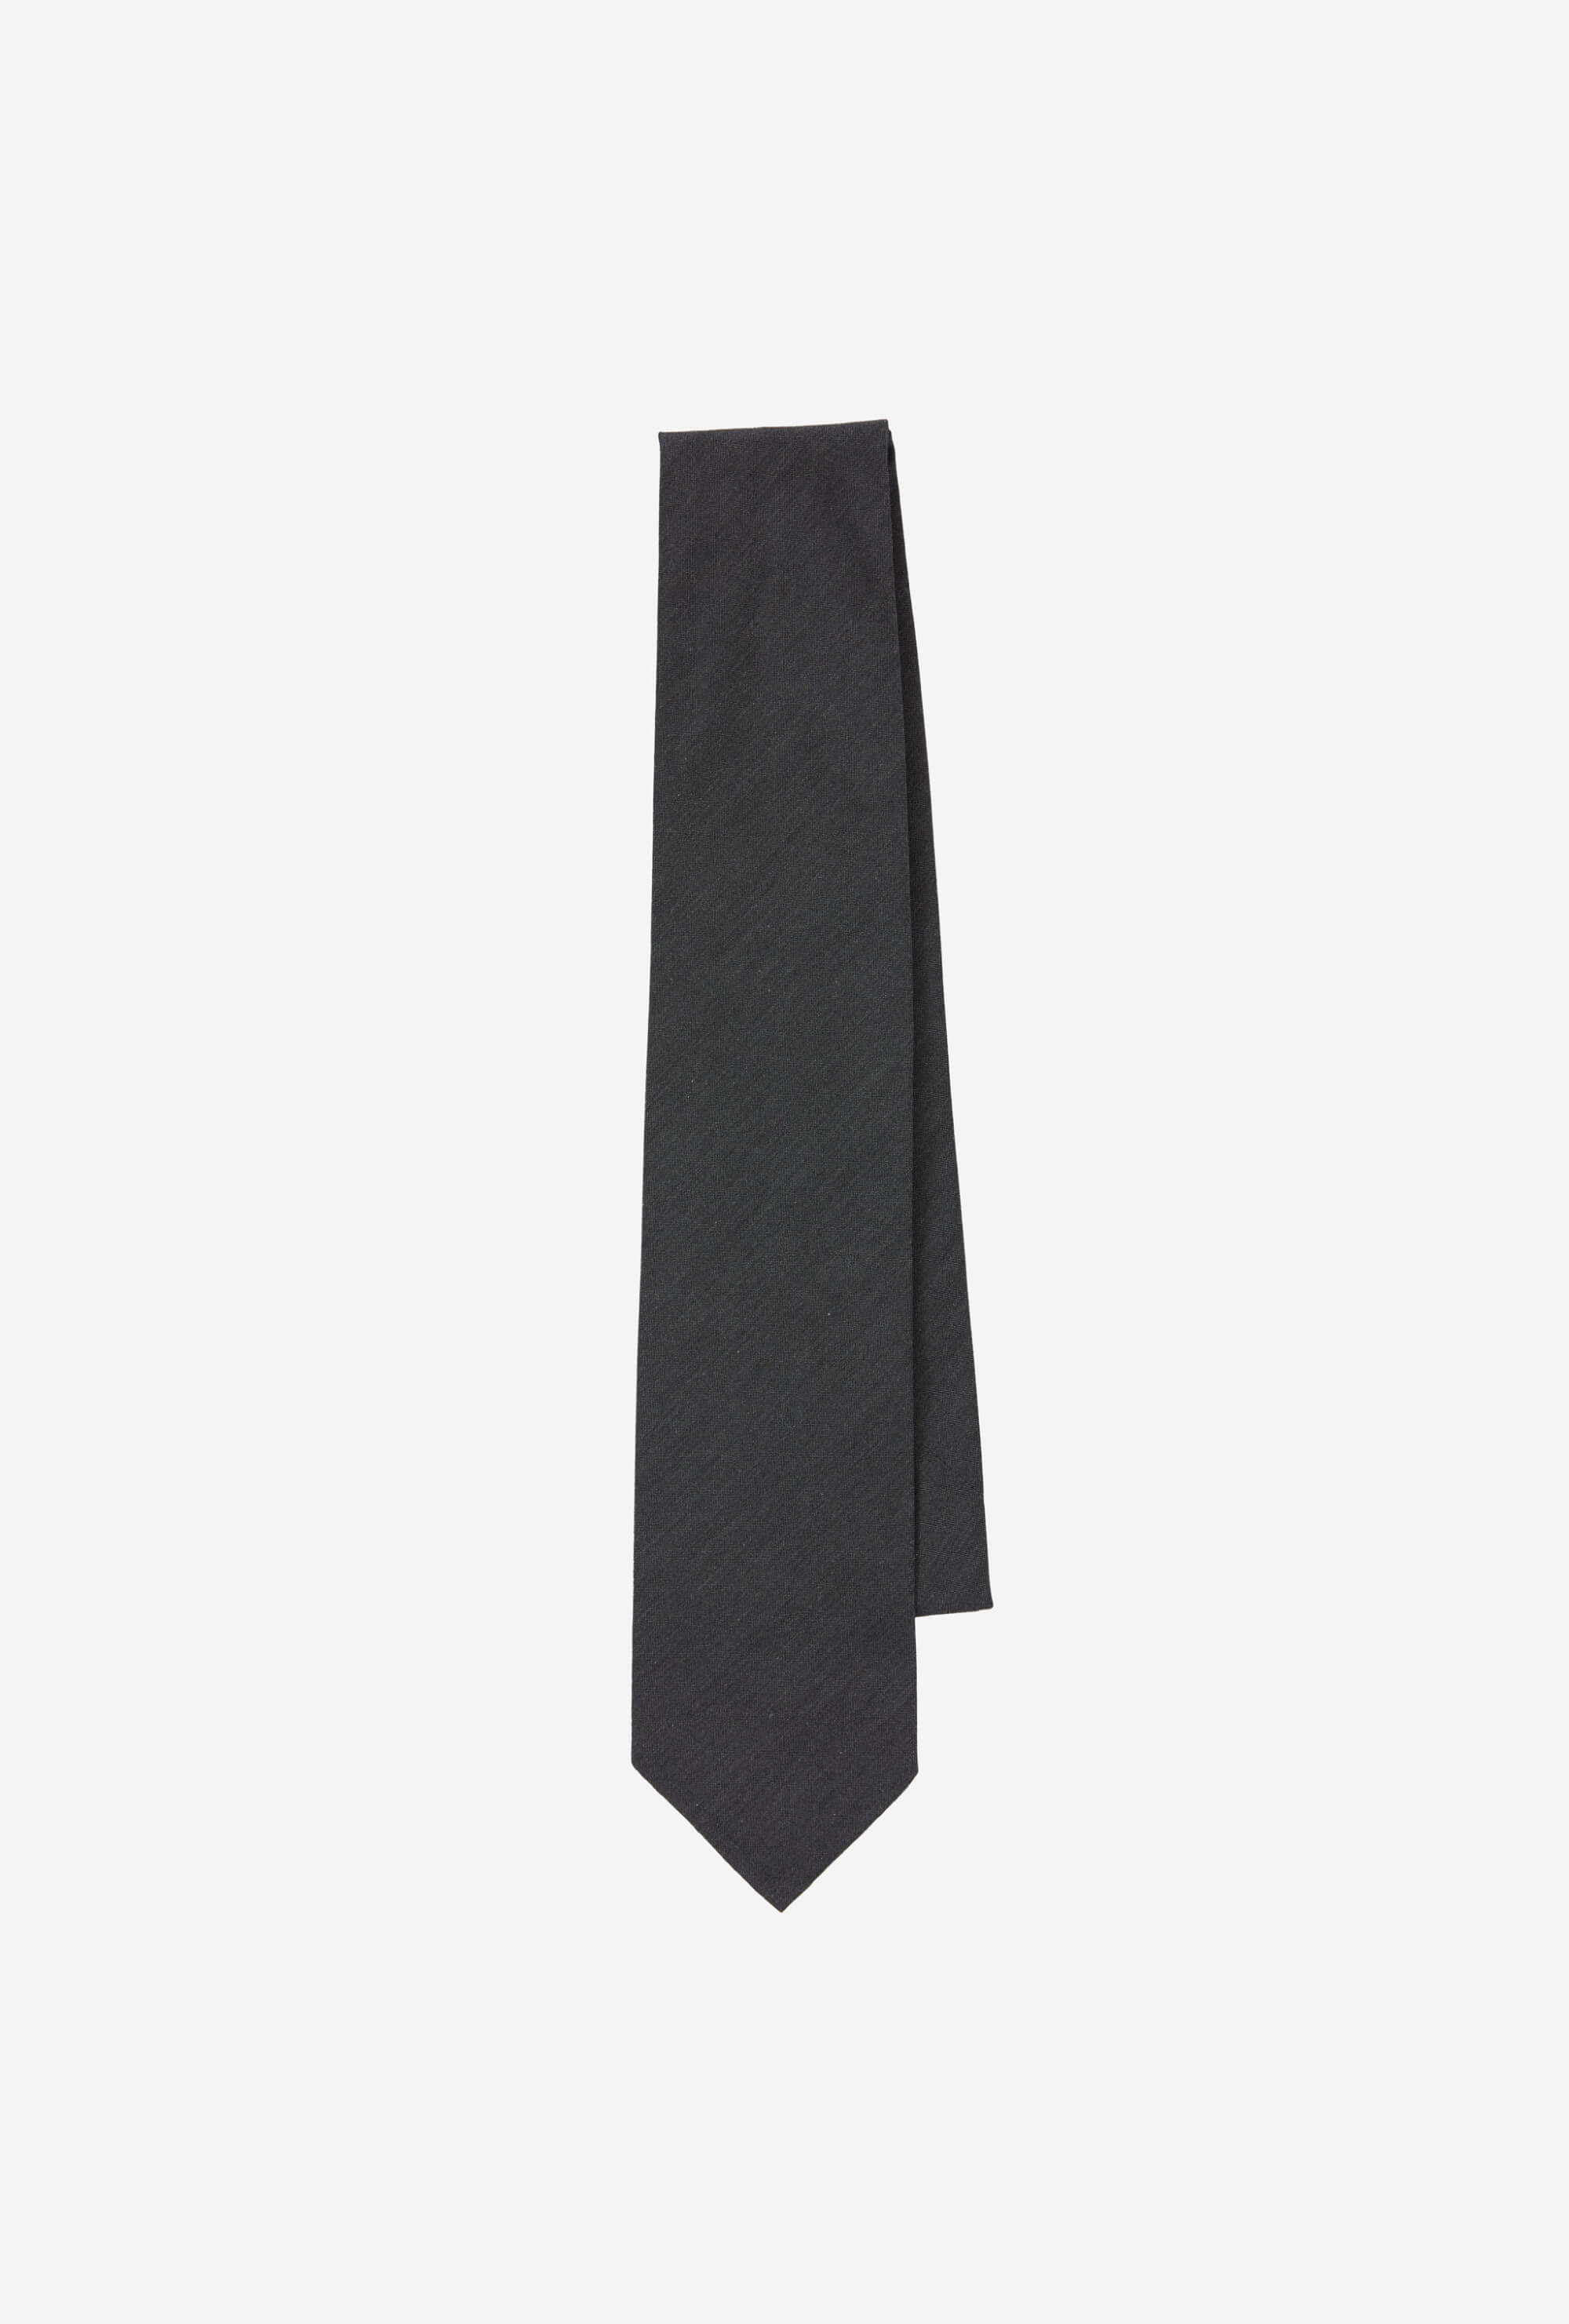 Dry Silk Tie Anthracite